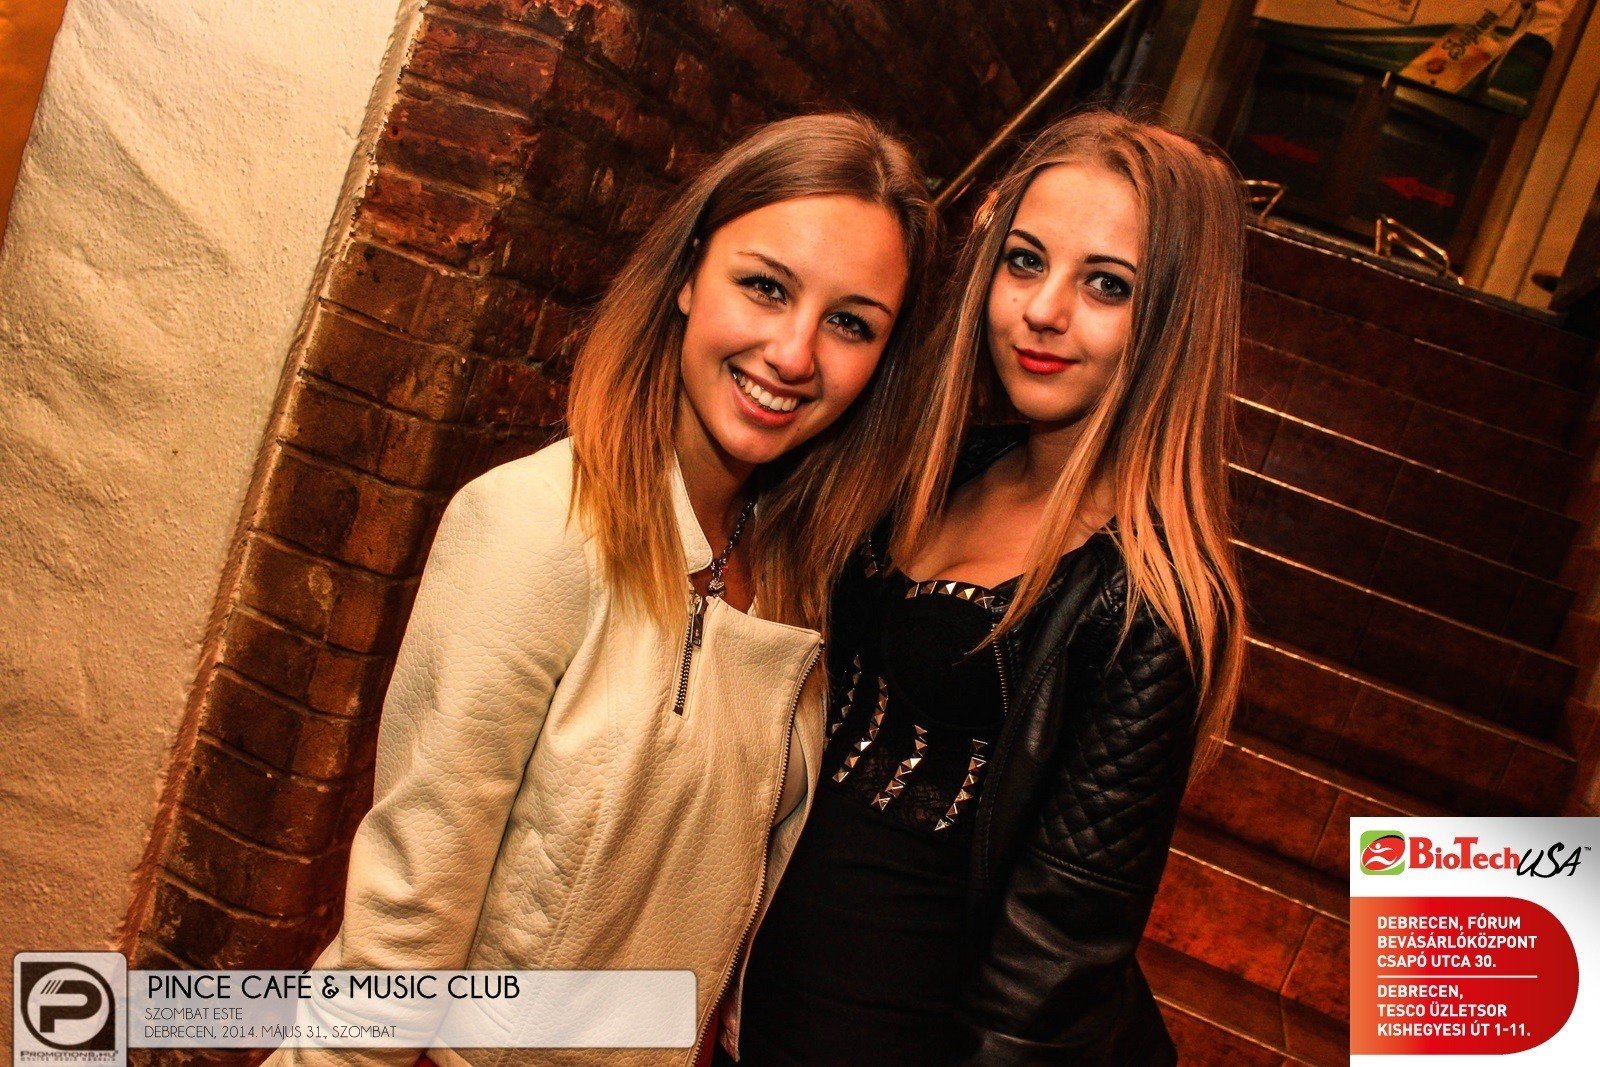 Debrecen, Pince Café & Music Club - 2014. Május 31.,Szombat